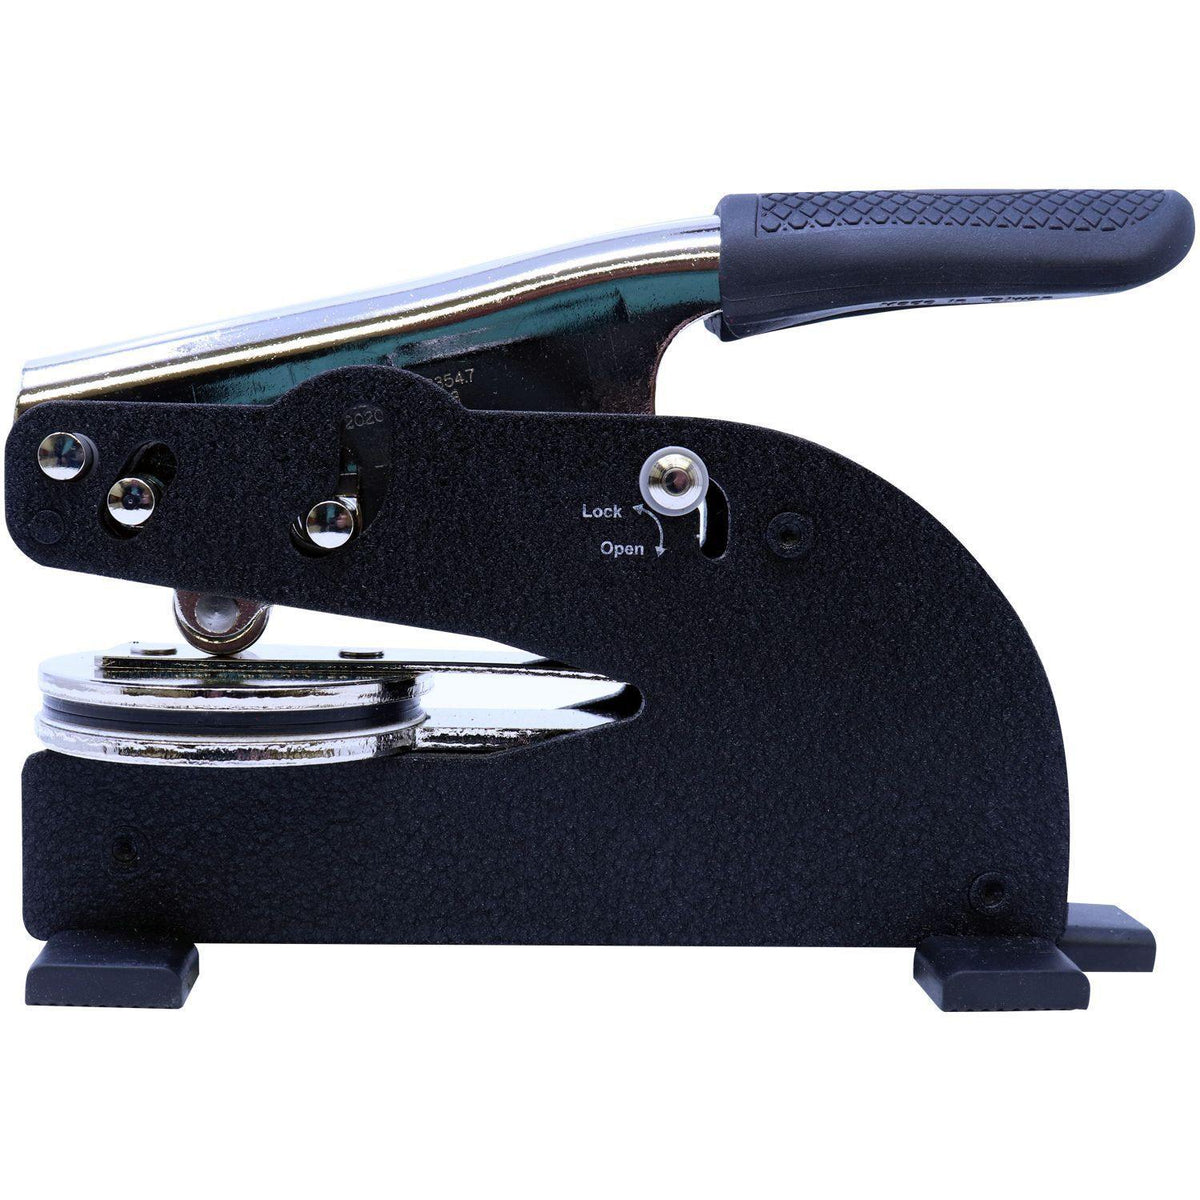 Professional Long Reach Desk Seal Embosser - Engineer Seal Stamps - Embosser Type_Desk, Embosser Type_Long Reach, Type of Use_Professional, Use_Heavy Duty